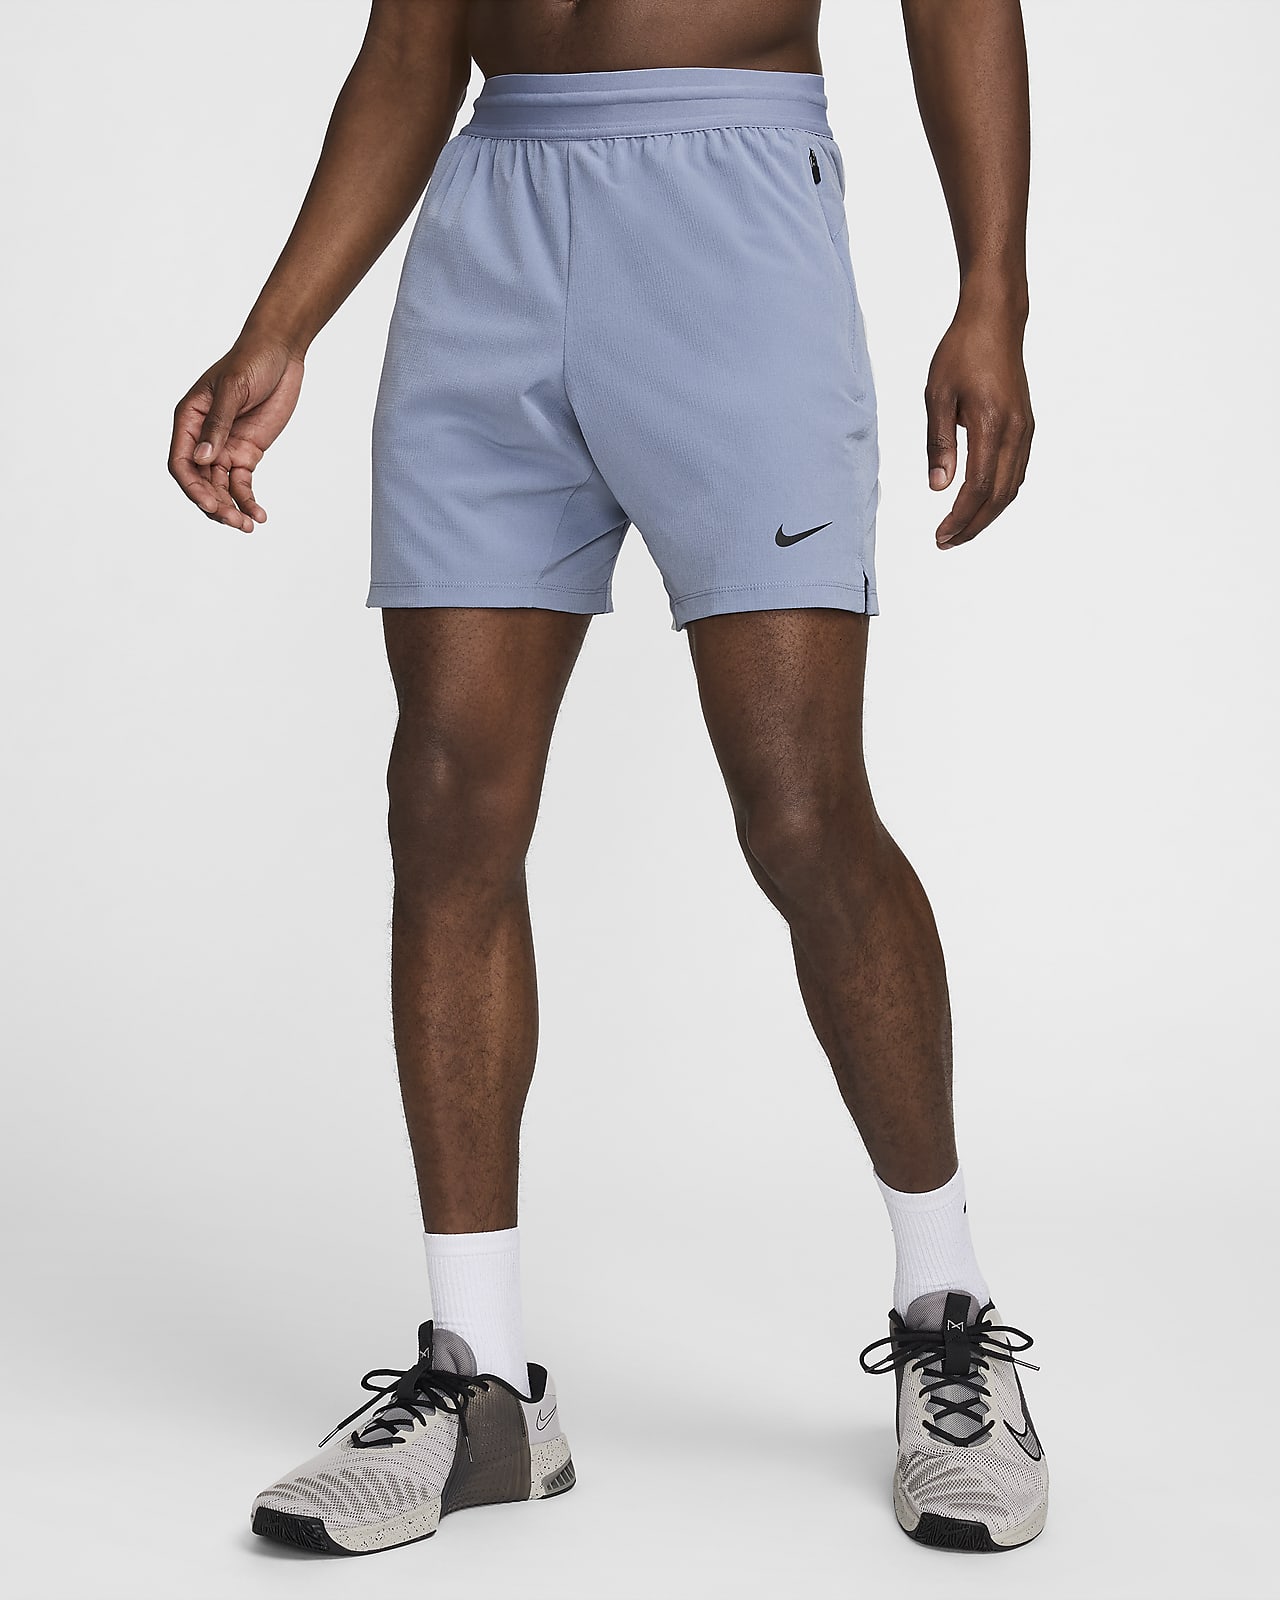 Nike Flex Rep 4.0 Pantalons curts de fitnes sense folre Dri-FIT de 18 cm - Home